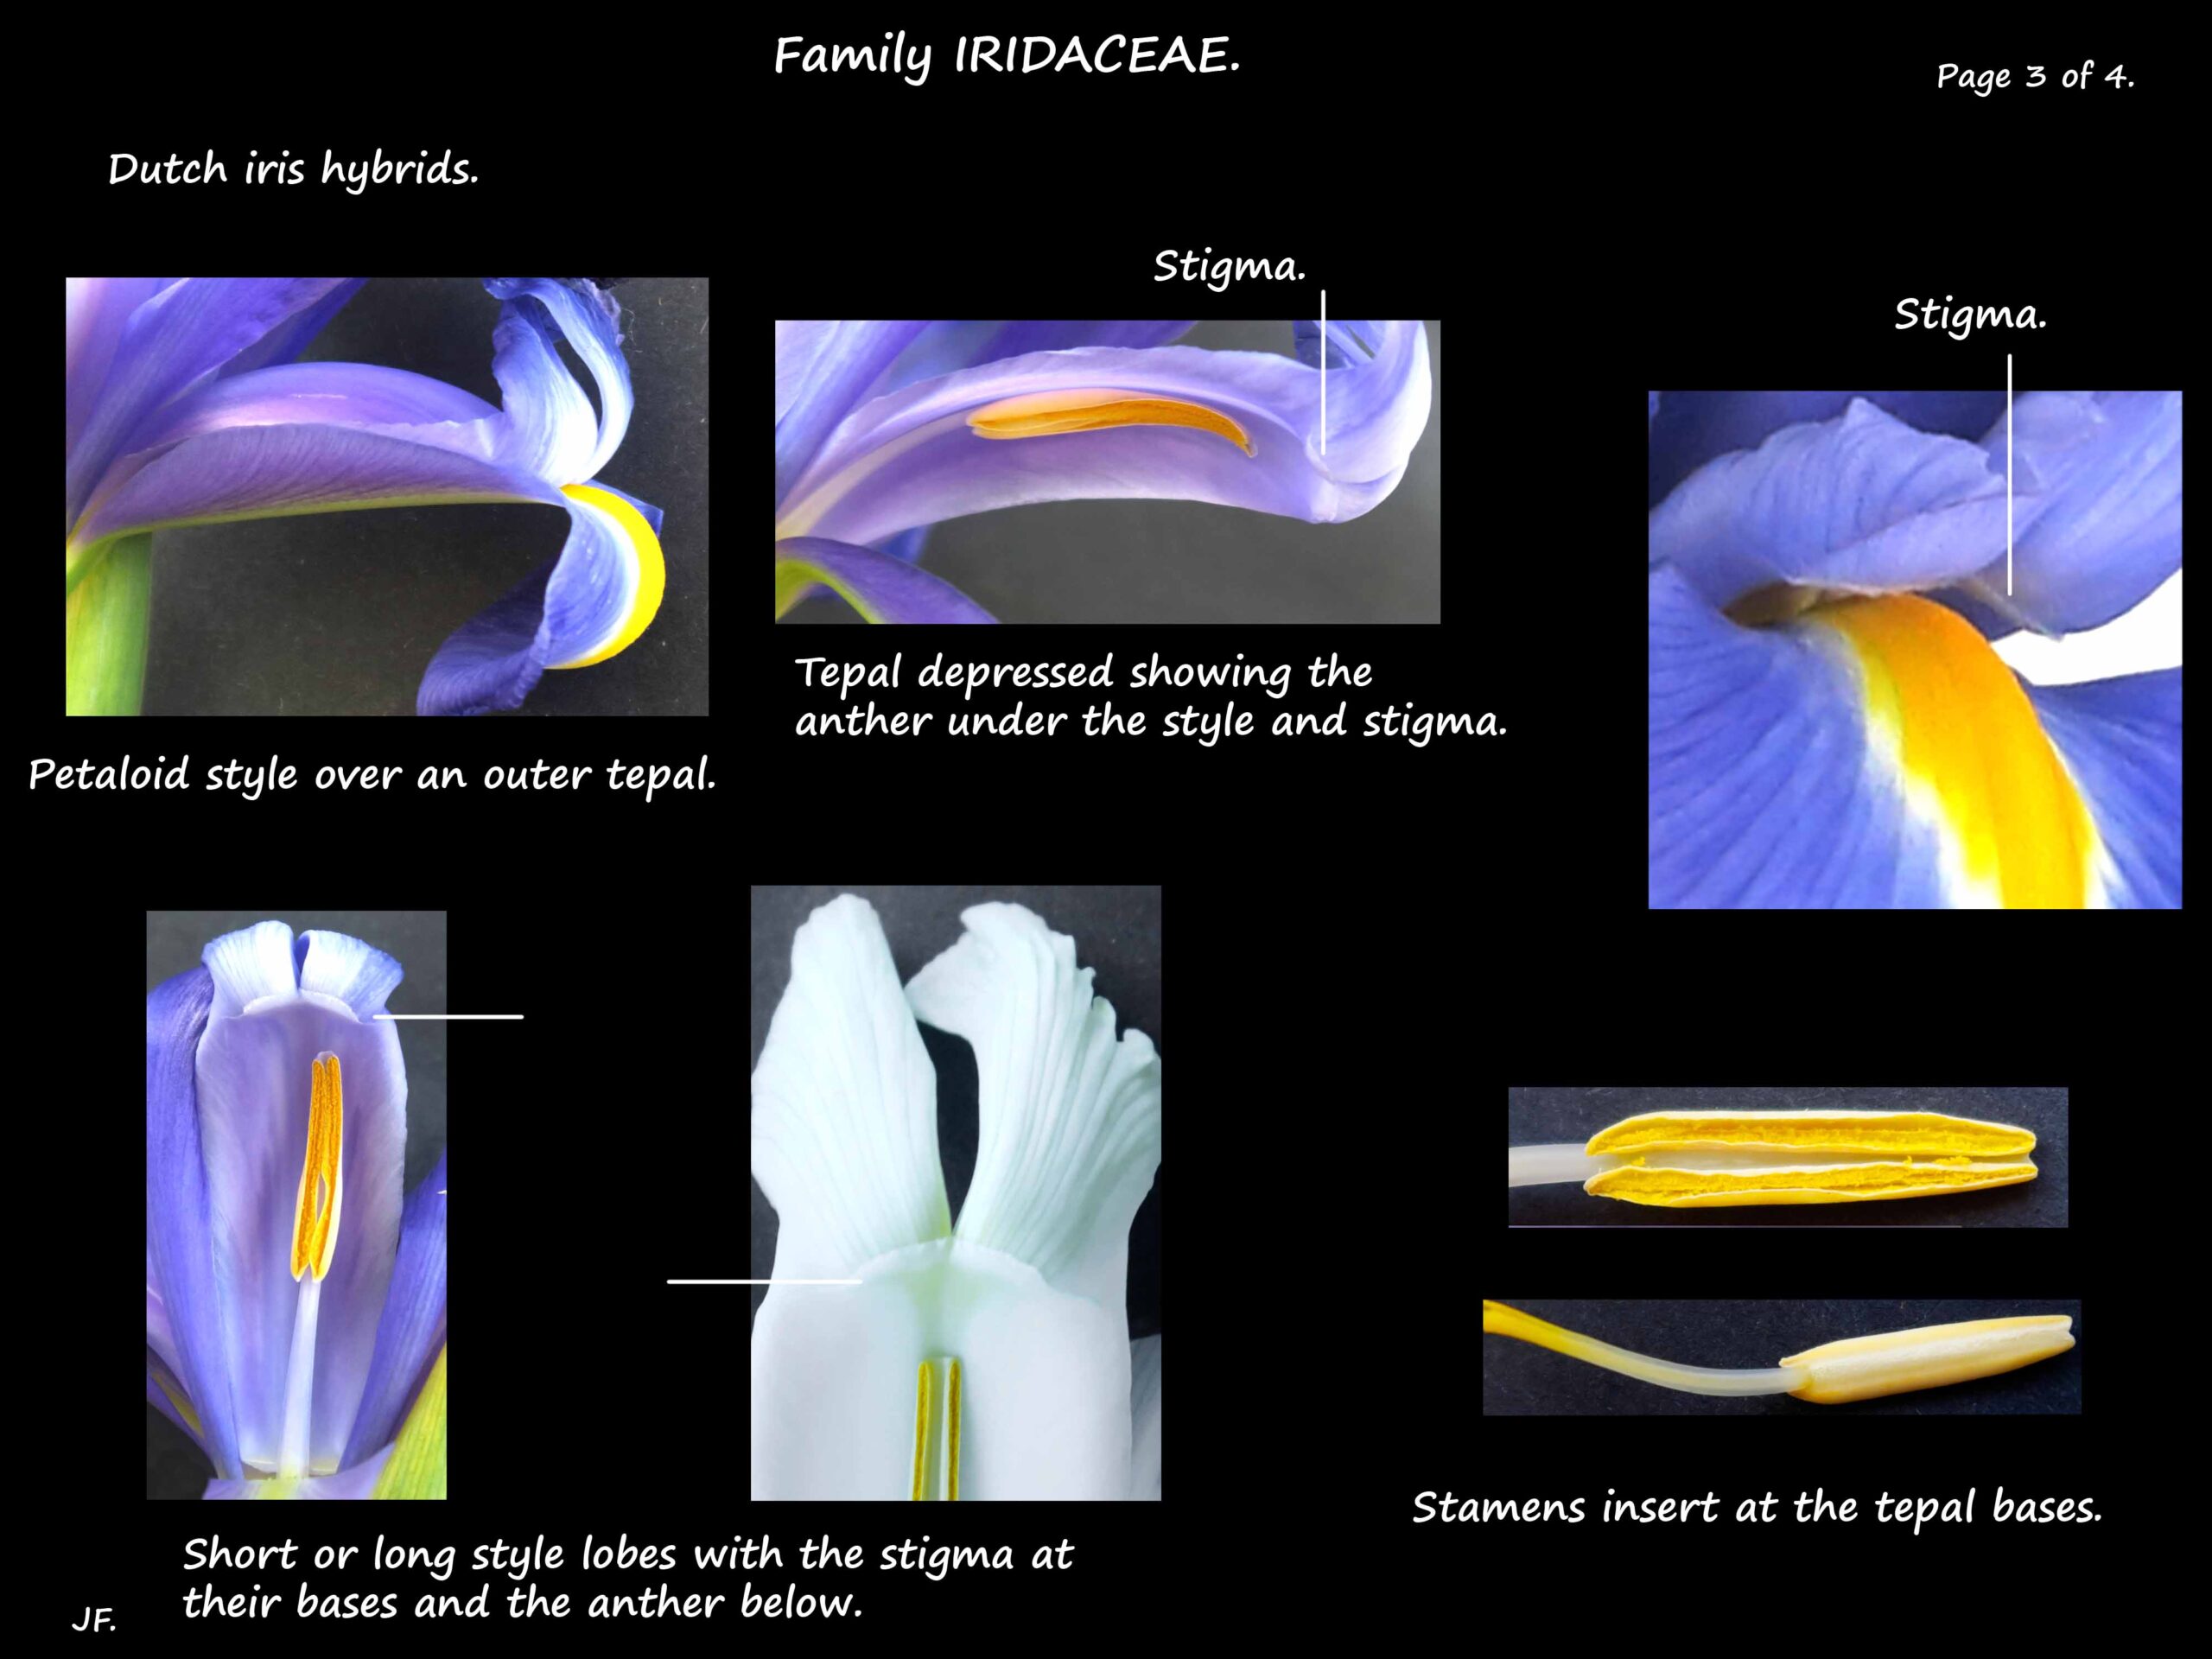 3 The stamens & stigma of Dutch iris flowers